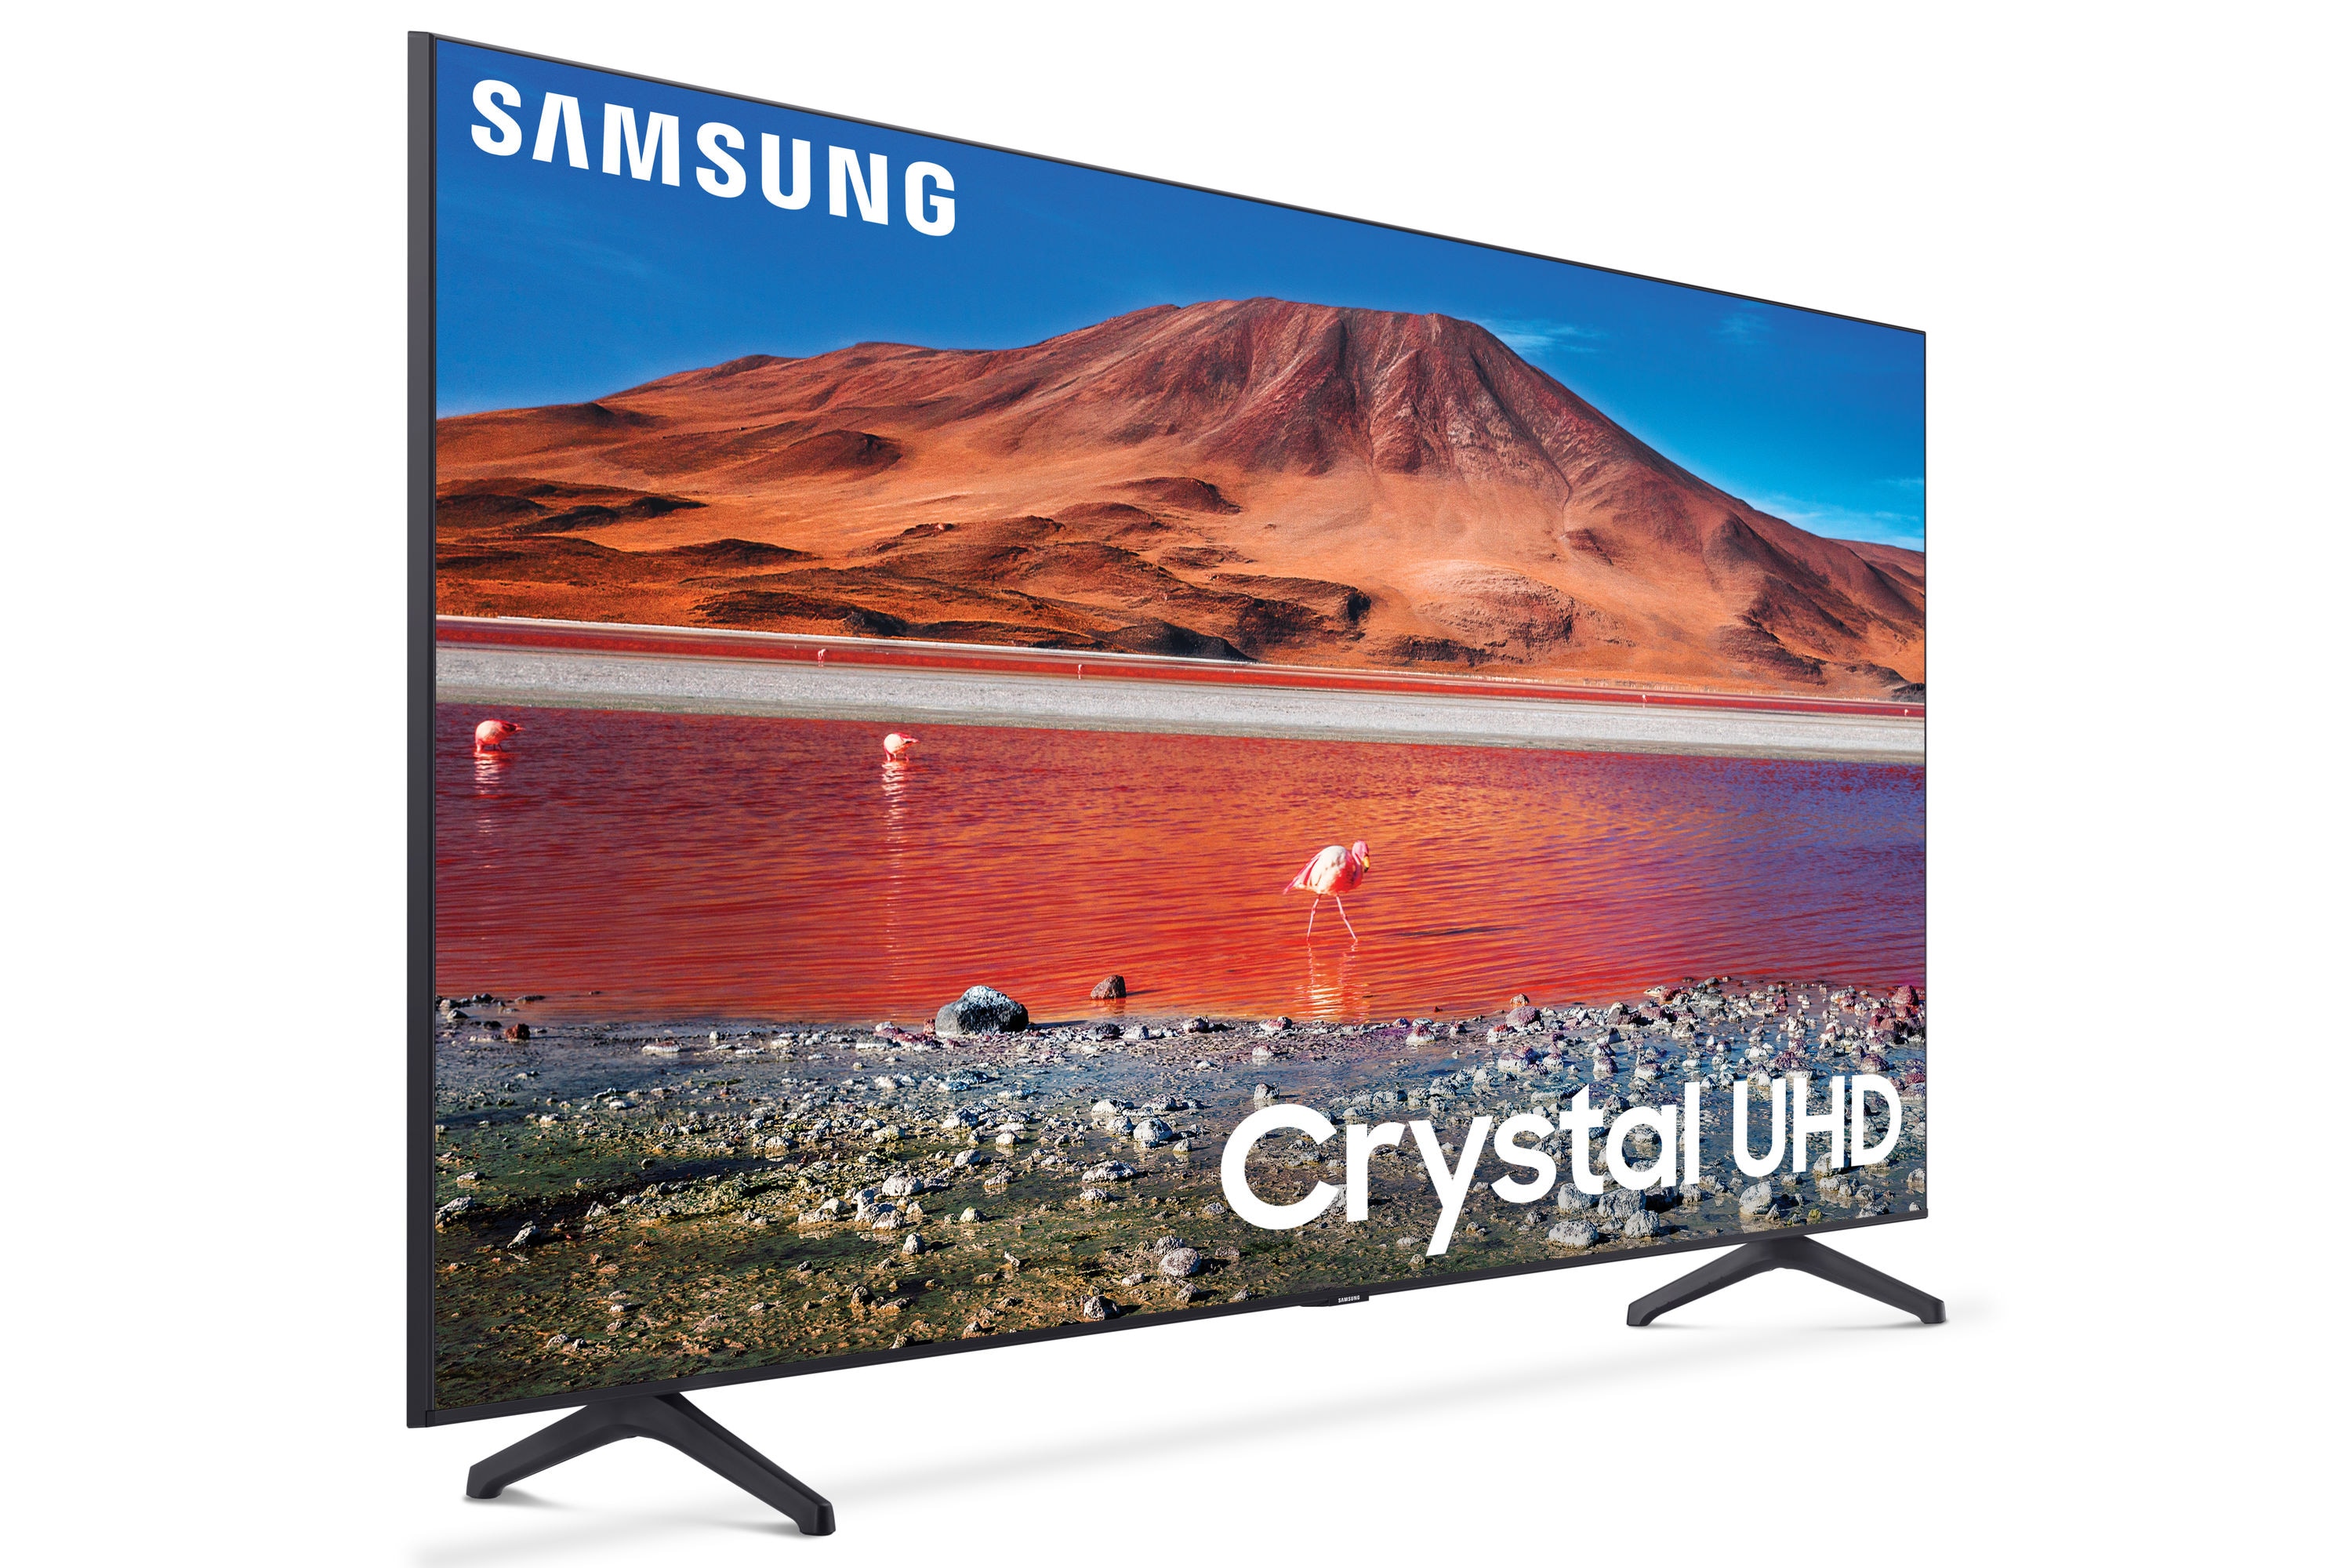 Samsung TU7000 Crystal UHD Smart TV (2020) 65-in 2160p (4K) Smart